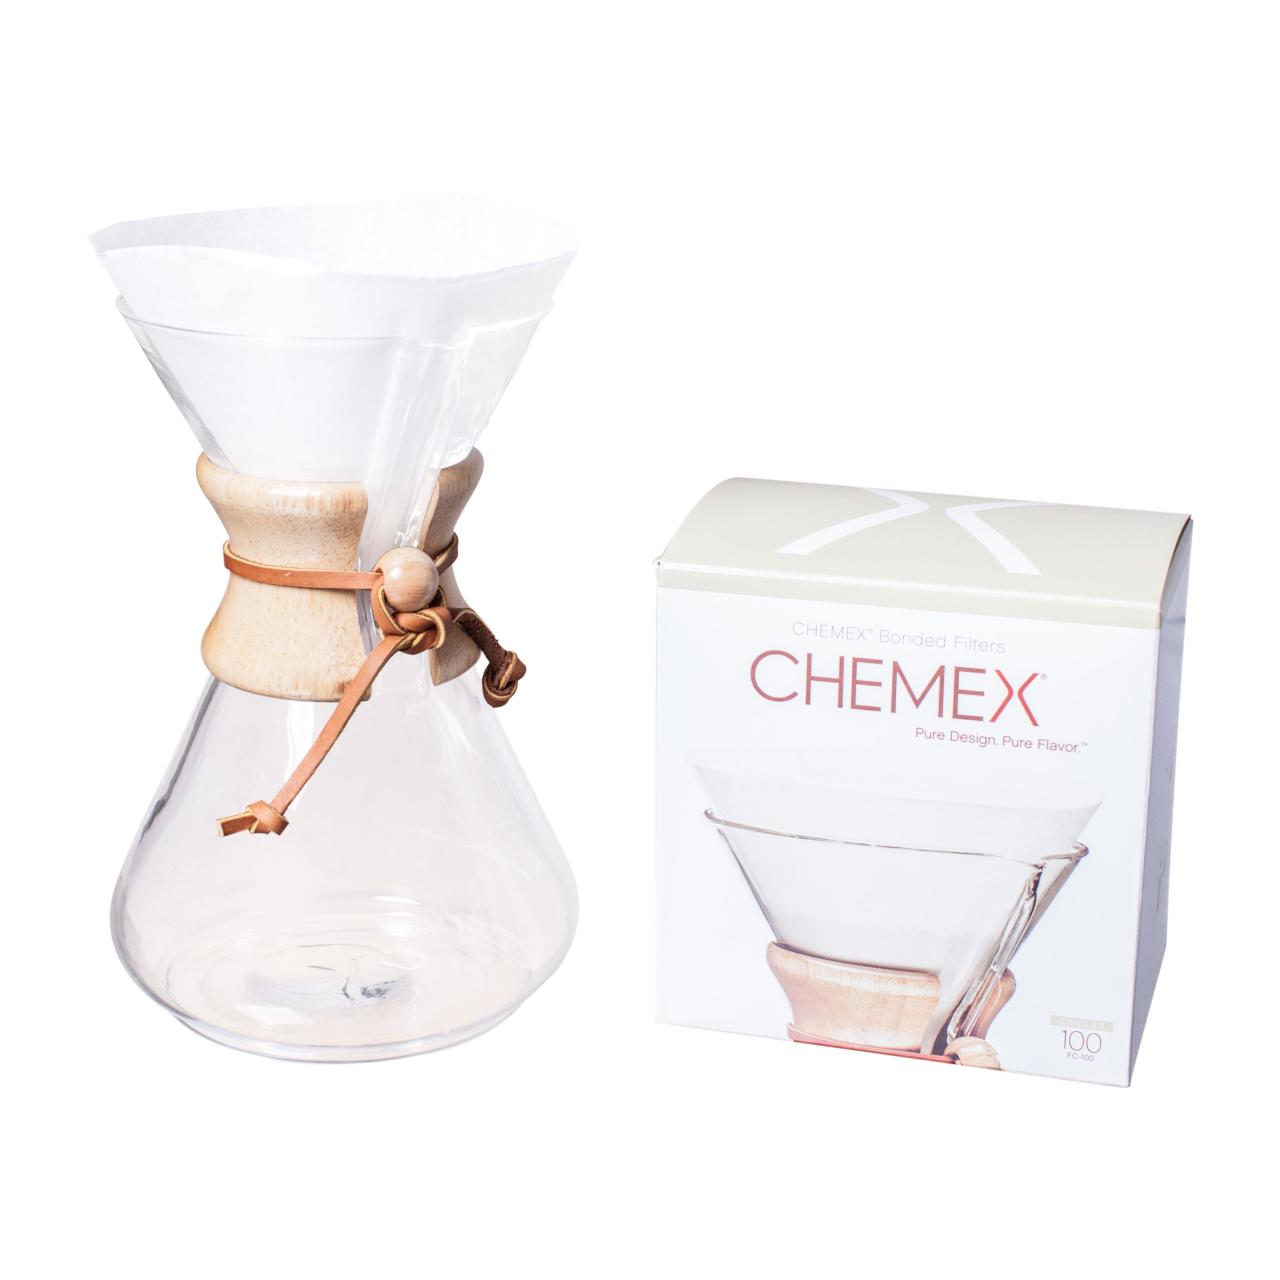 Chemex Bonded Filters Daire Kağıt Filtre 100 Adet 6 Kap